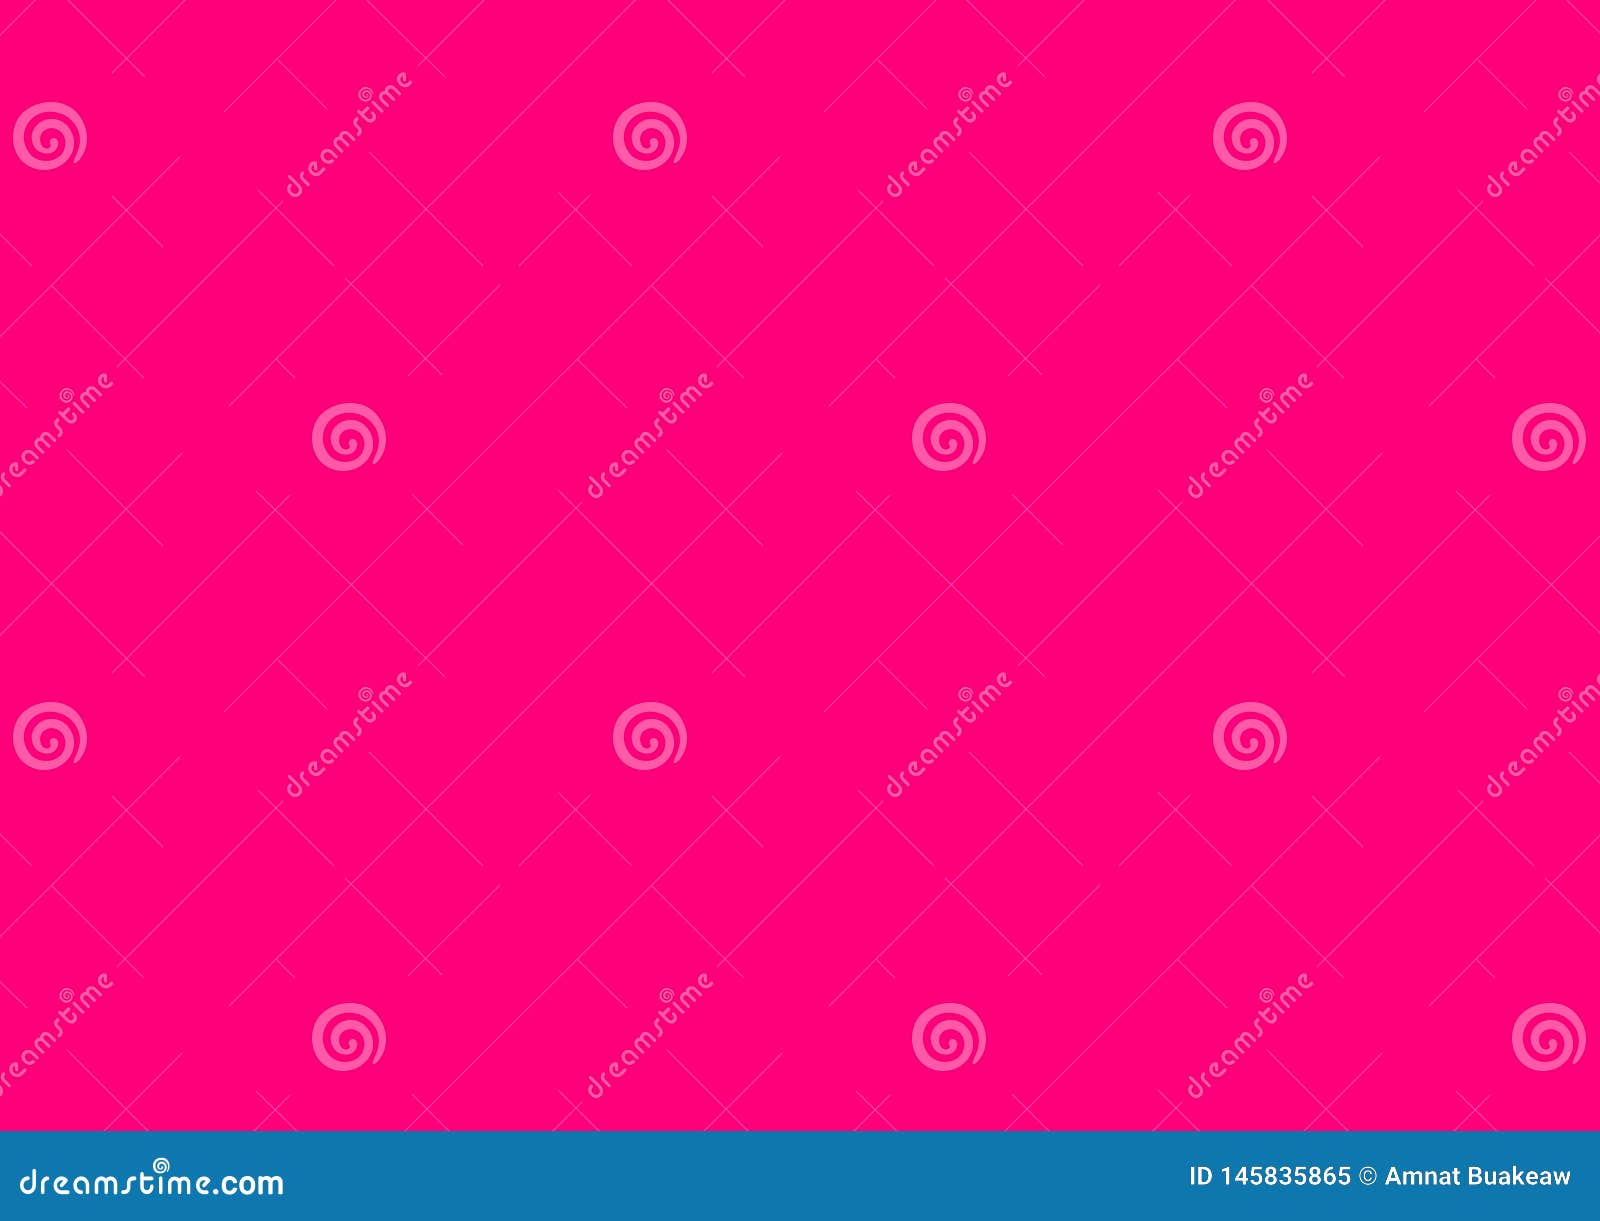 Magenta Pink Flat Rectangle For Background Pastel Pink Color